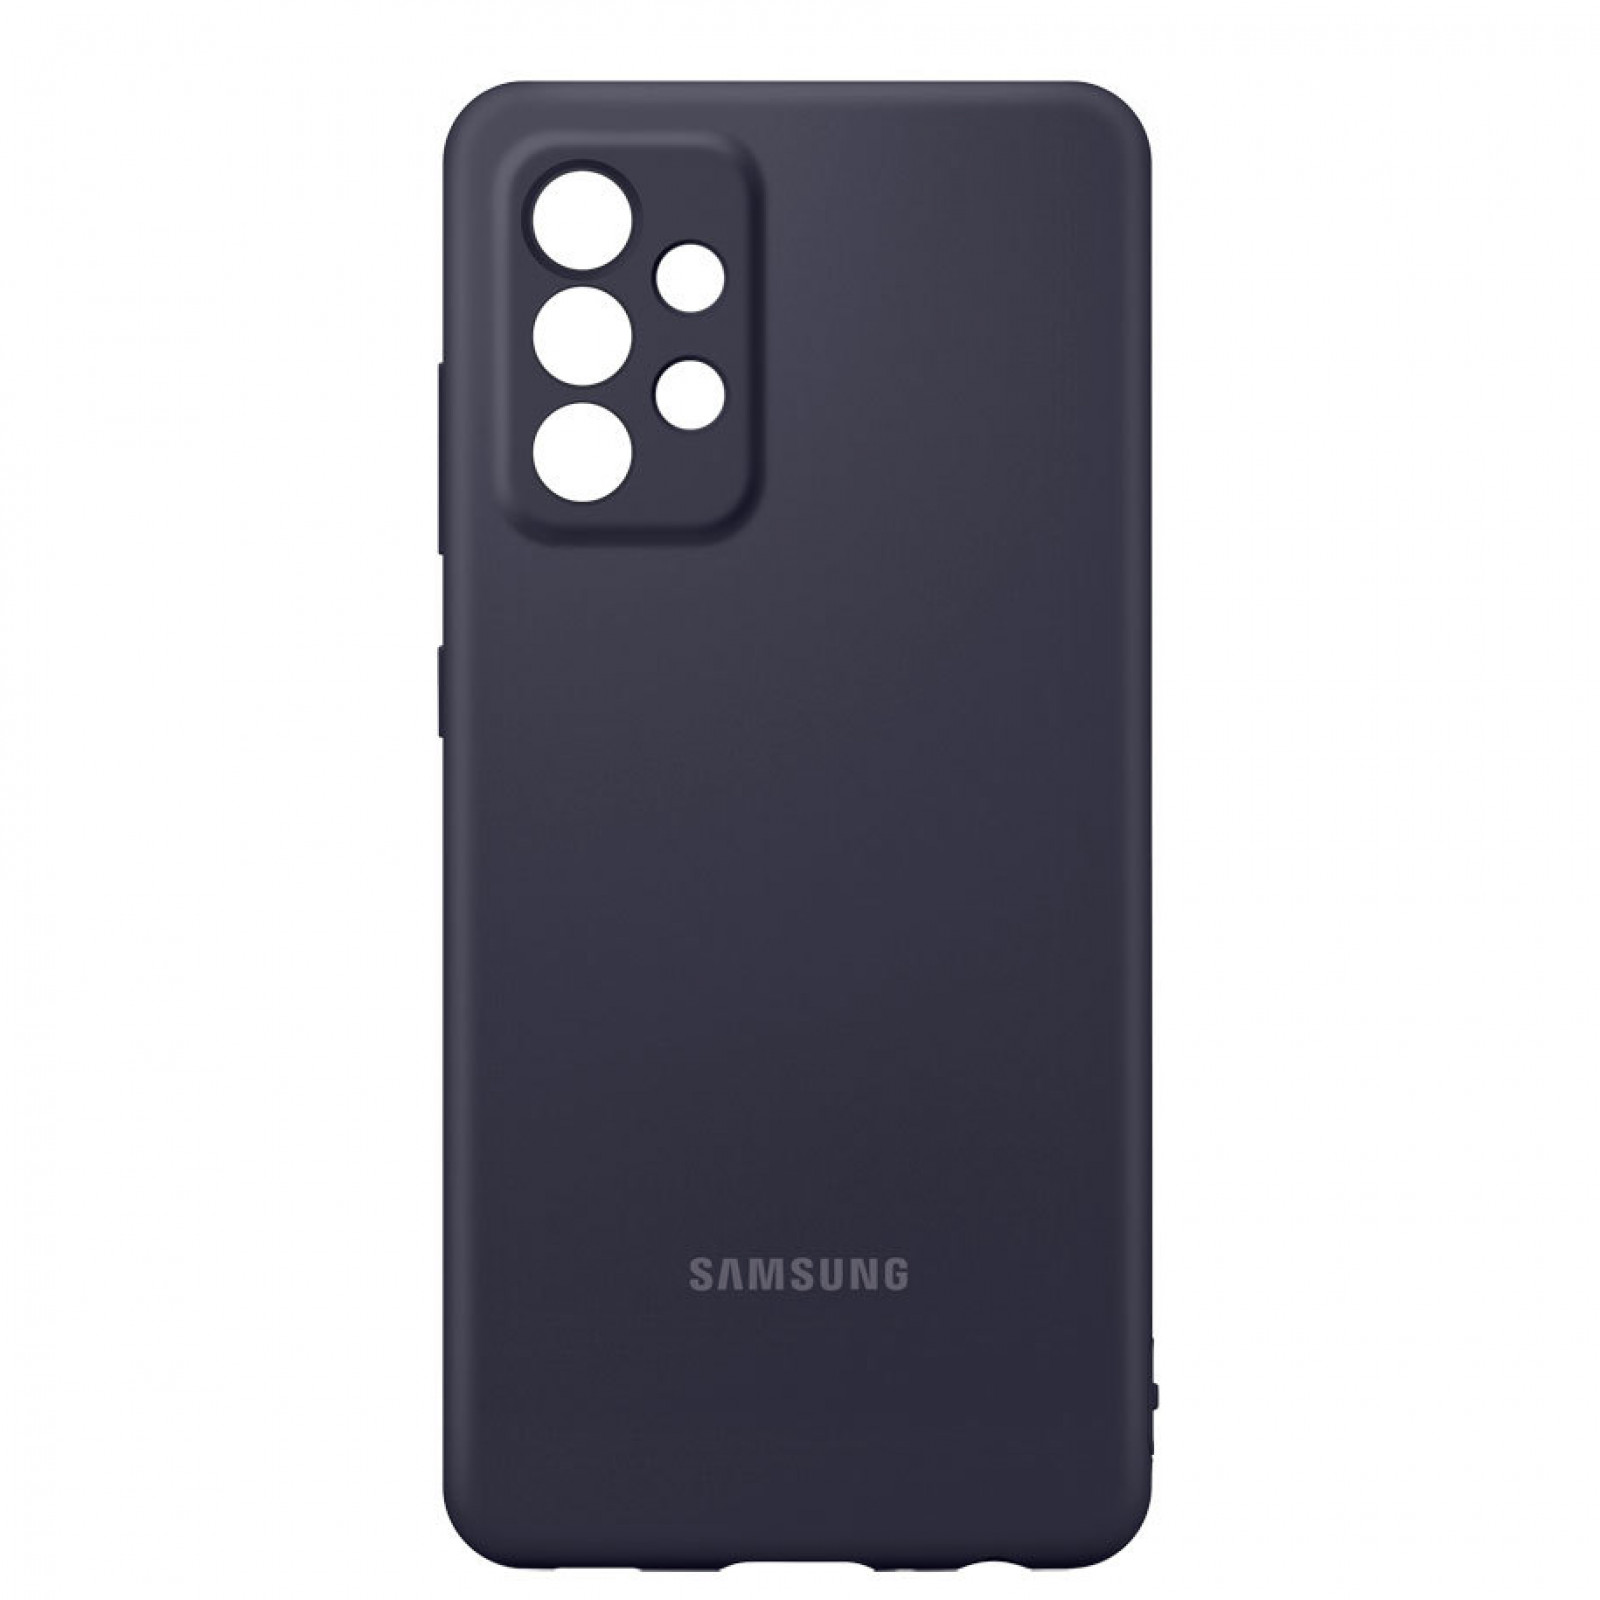 Оригинален гръб Samsung Silicone Cover за Galaxy A52/A52 5G/A52s - Черен, EF-PA525TBE